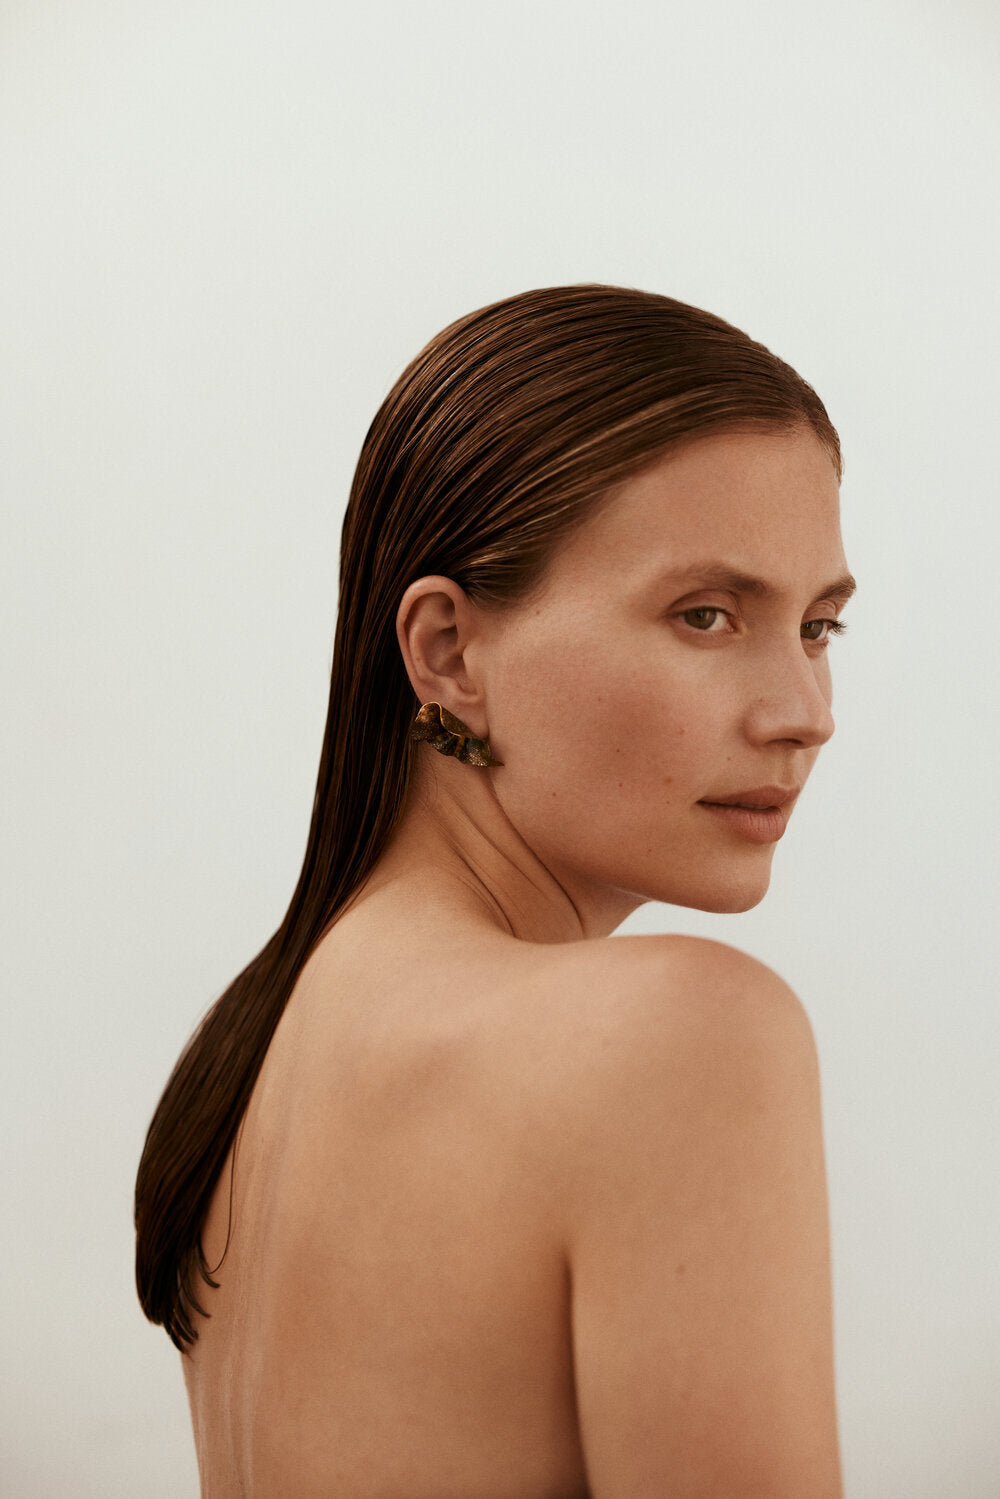 Oy earring - Mold atelier X Sofia Olsson